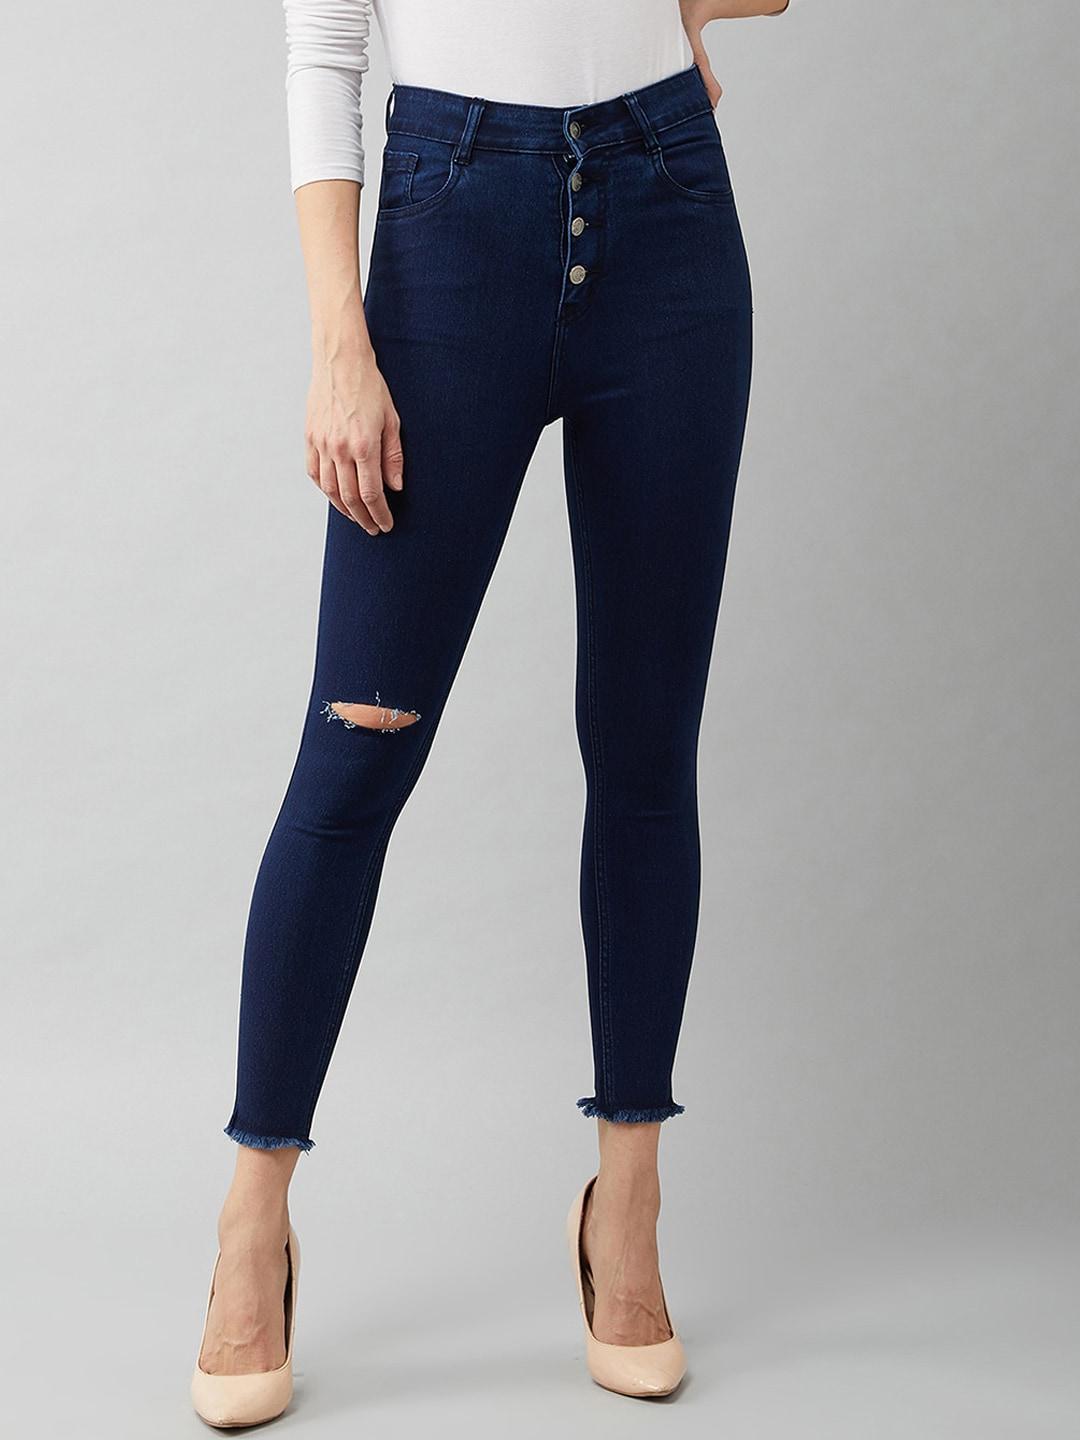 DOLCE CRUDO Women Navy Blue Skinny Fit High-Rise Slash Knee Stretchable Jeans